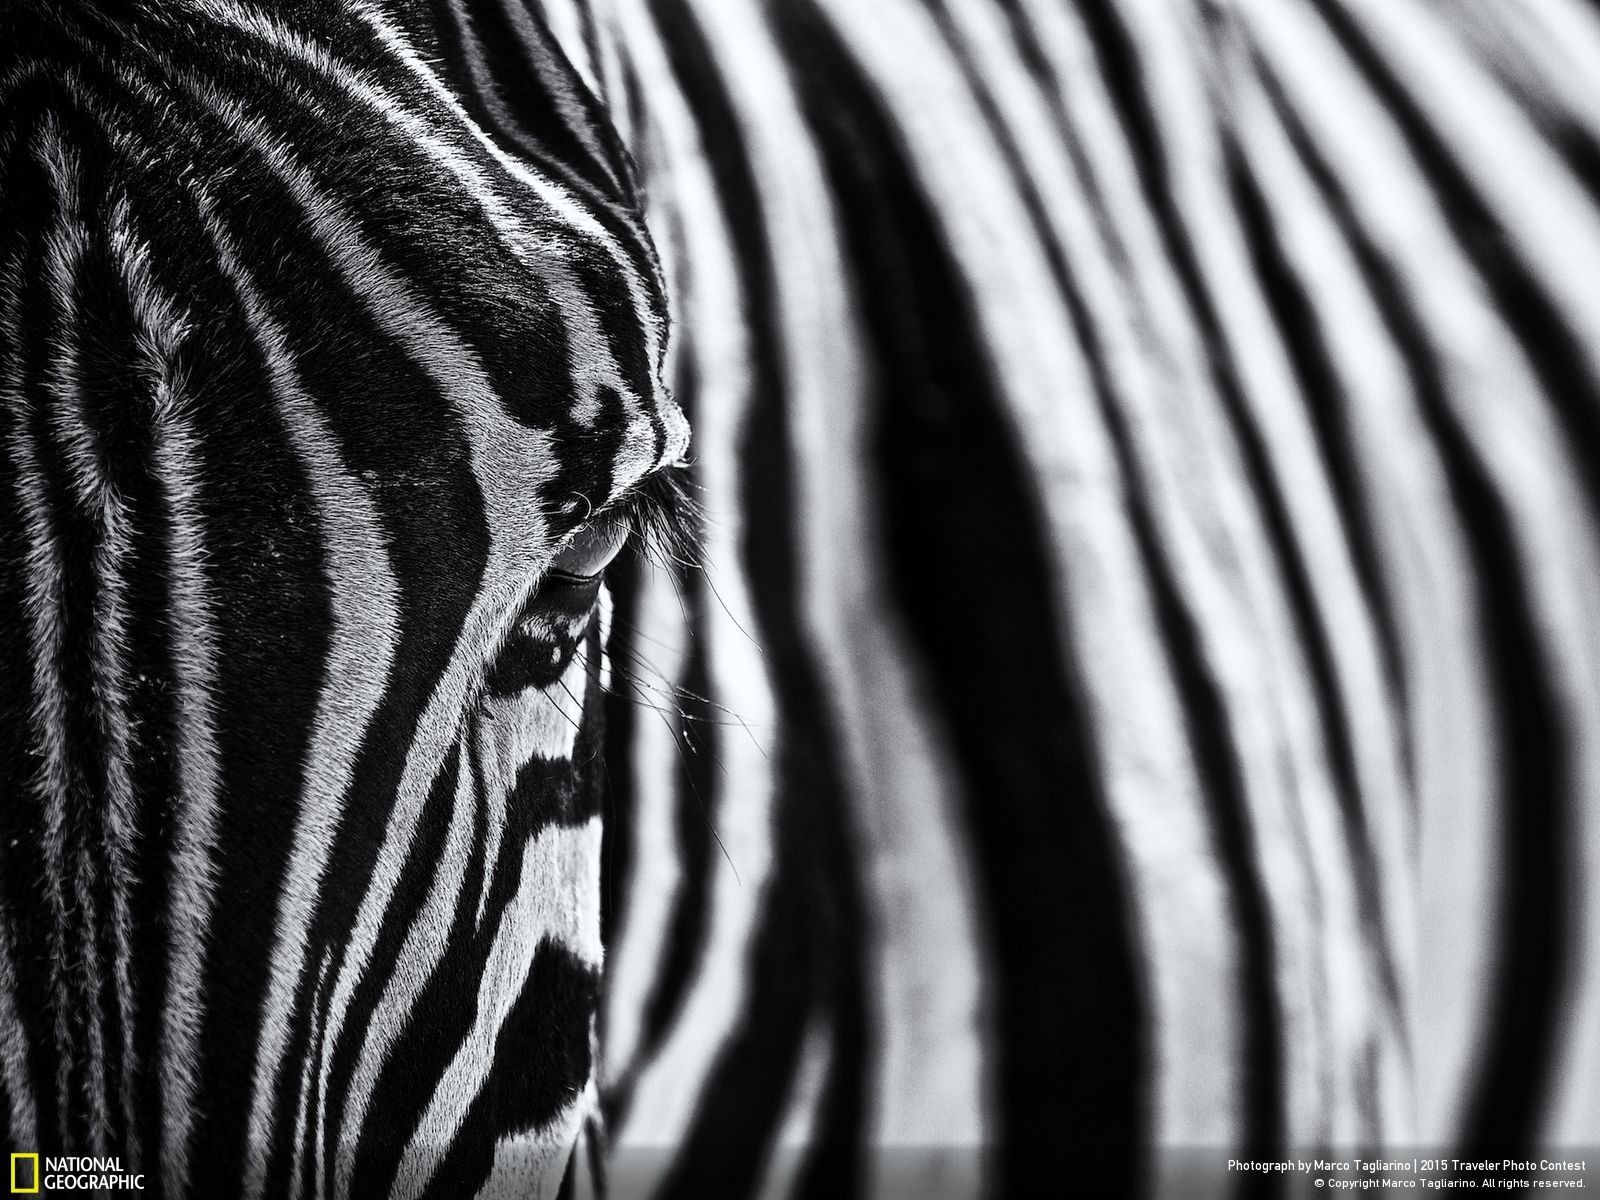 General 1600x1200 wildlife animals zebras National Geographic 2015 (Year) closeup watermarked